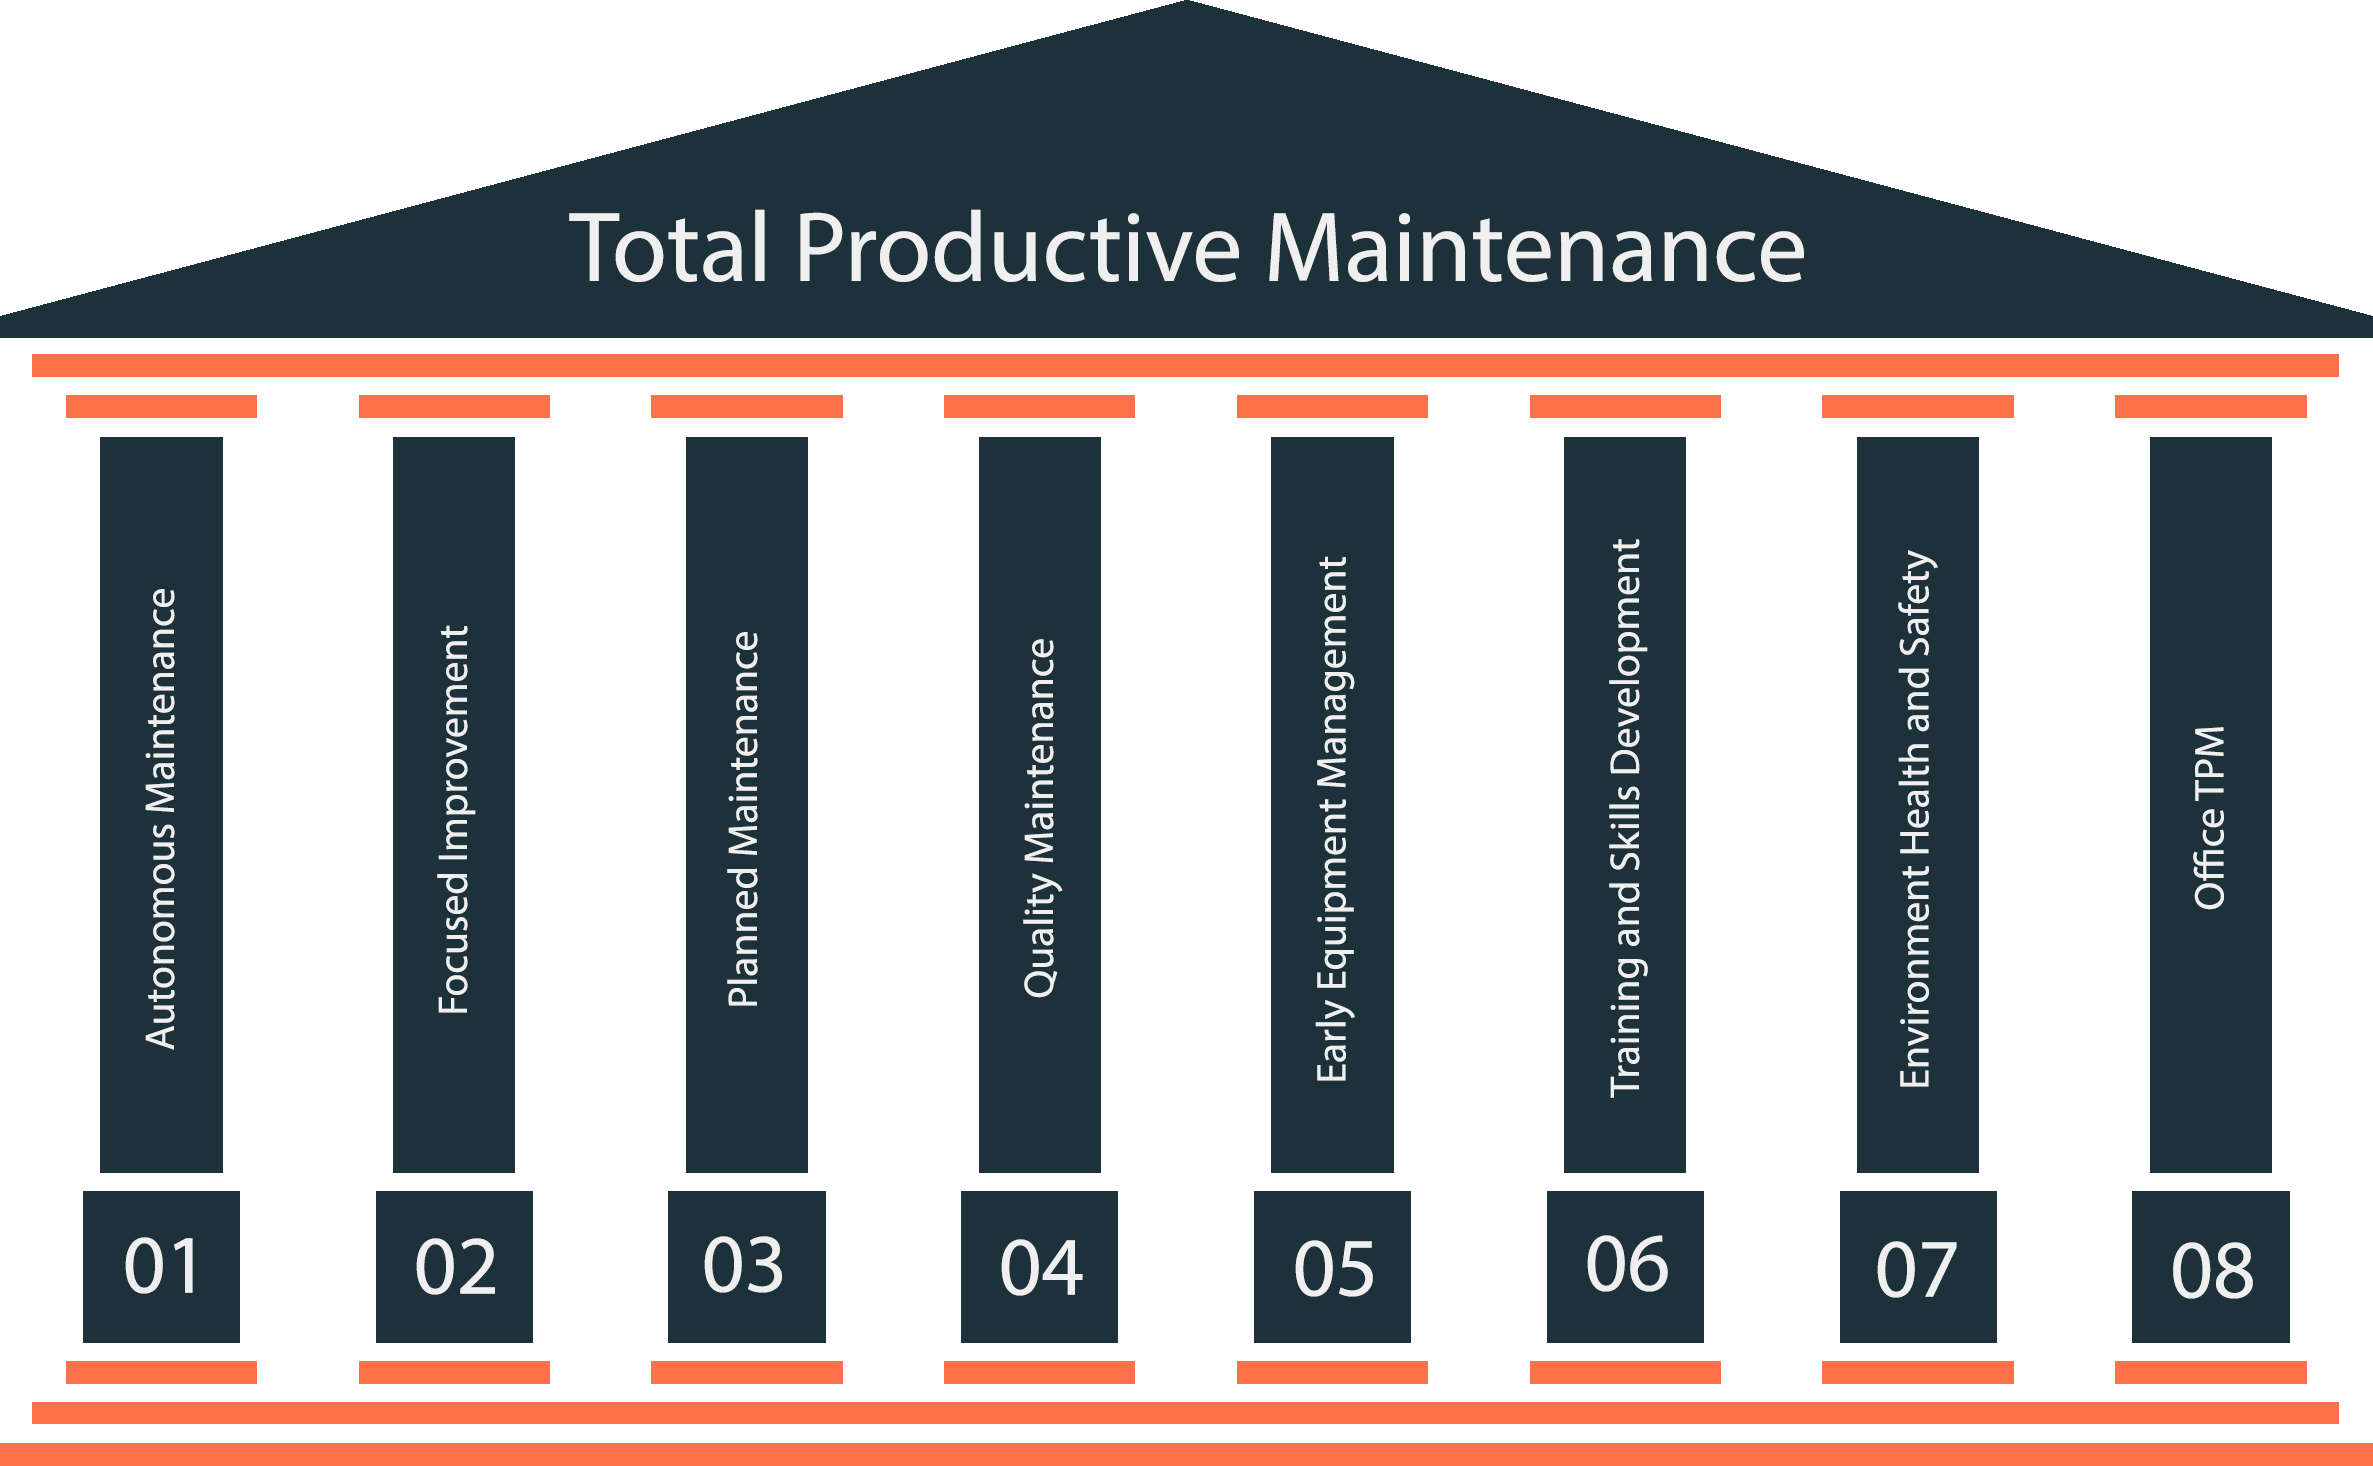 8 pillars of total productive maintenance